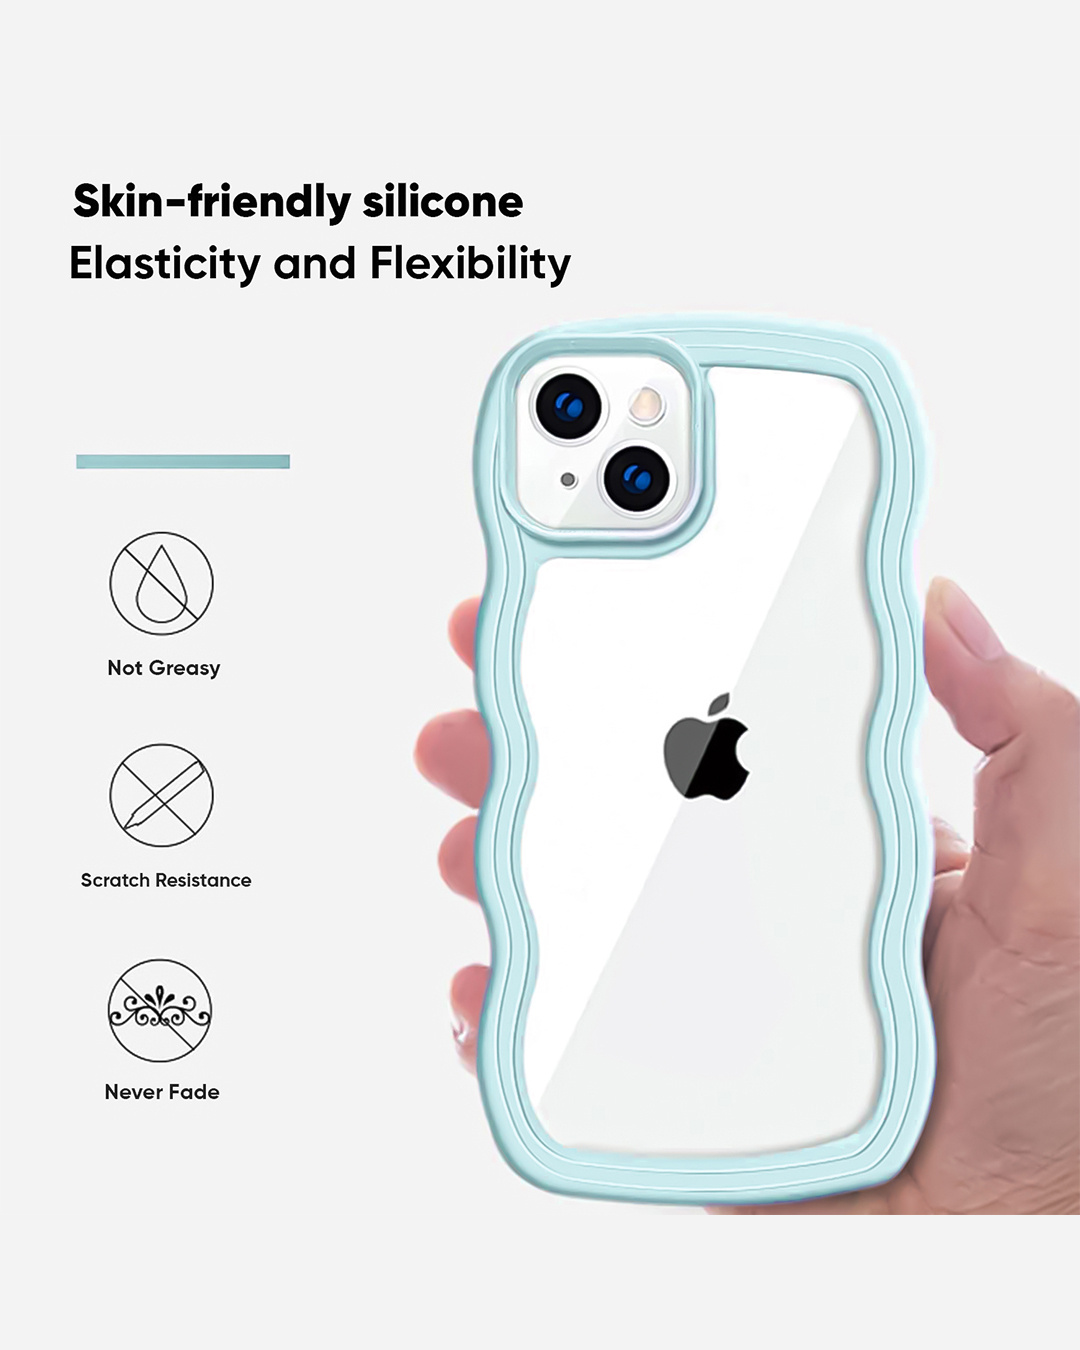 Sky blue Original Silicone case for Apple iPhone 11